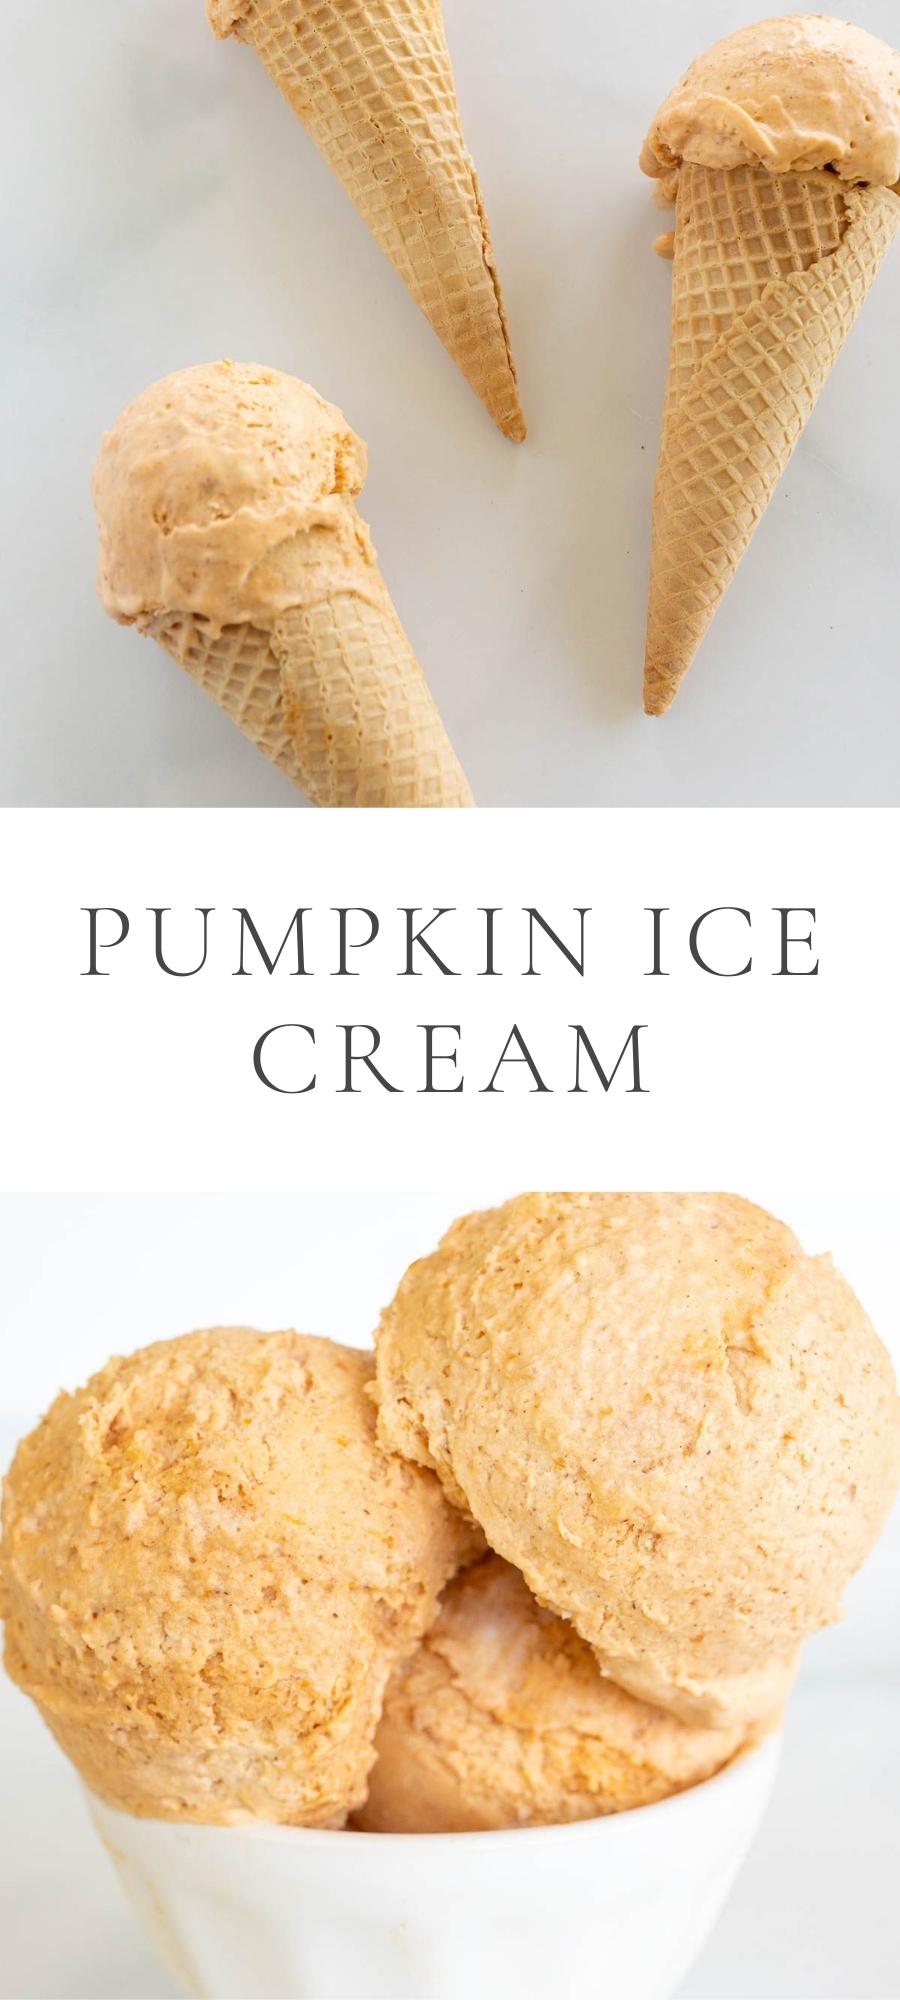 pumpkin ice cream in white bowl